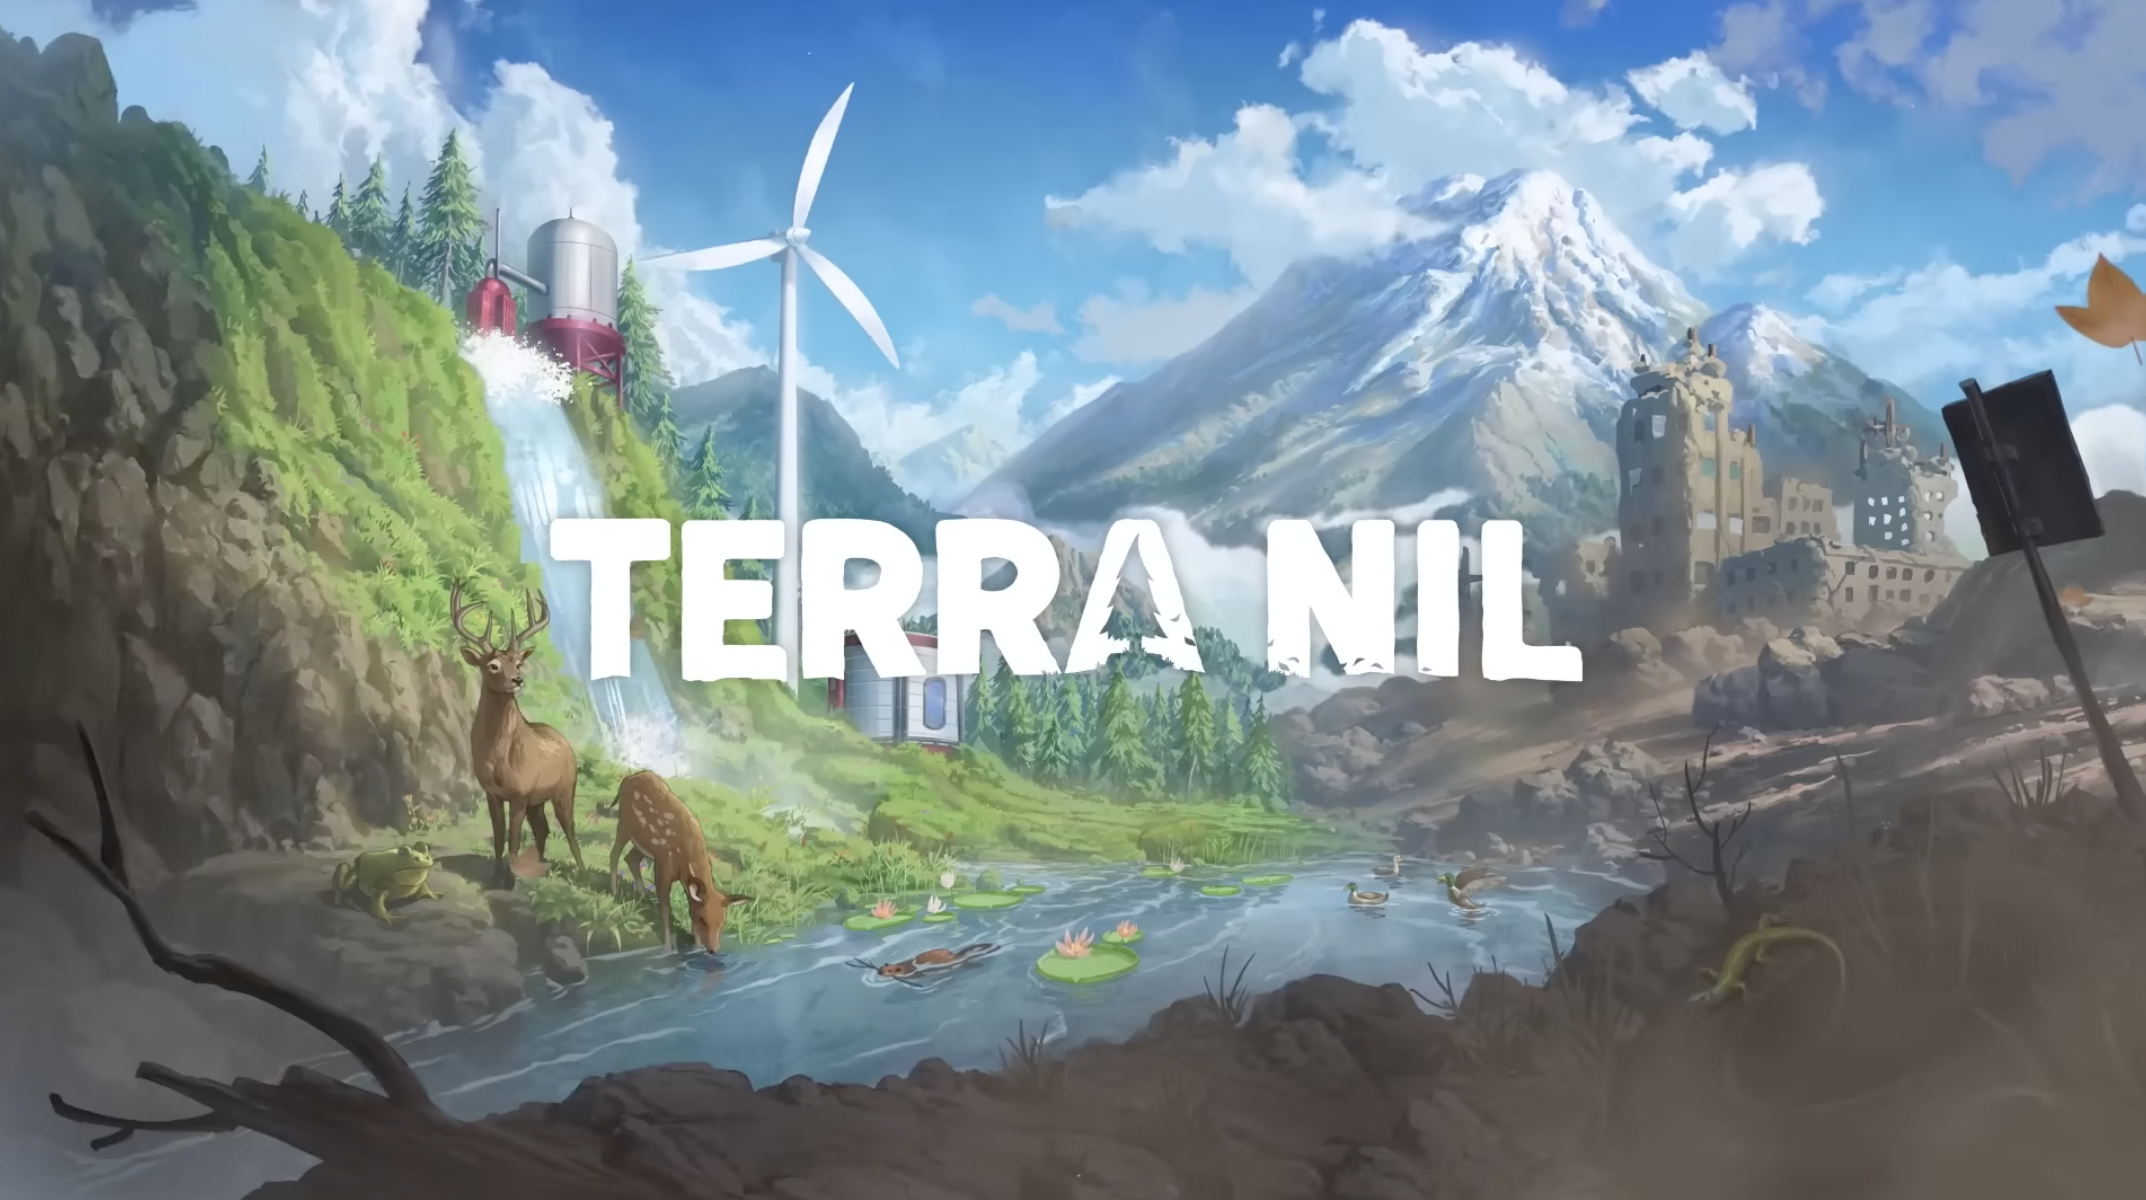 Terra Nil video game screen capture from Netflix game trailer via Youtube.